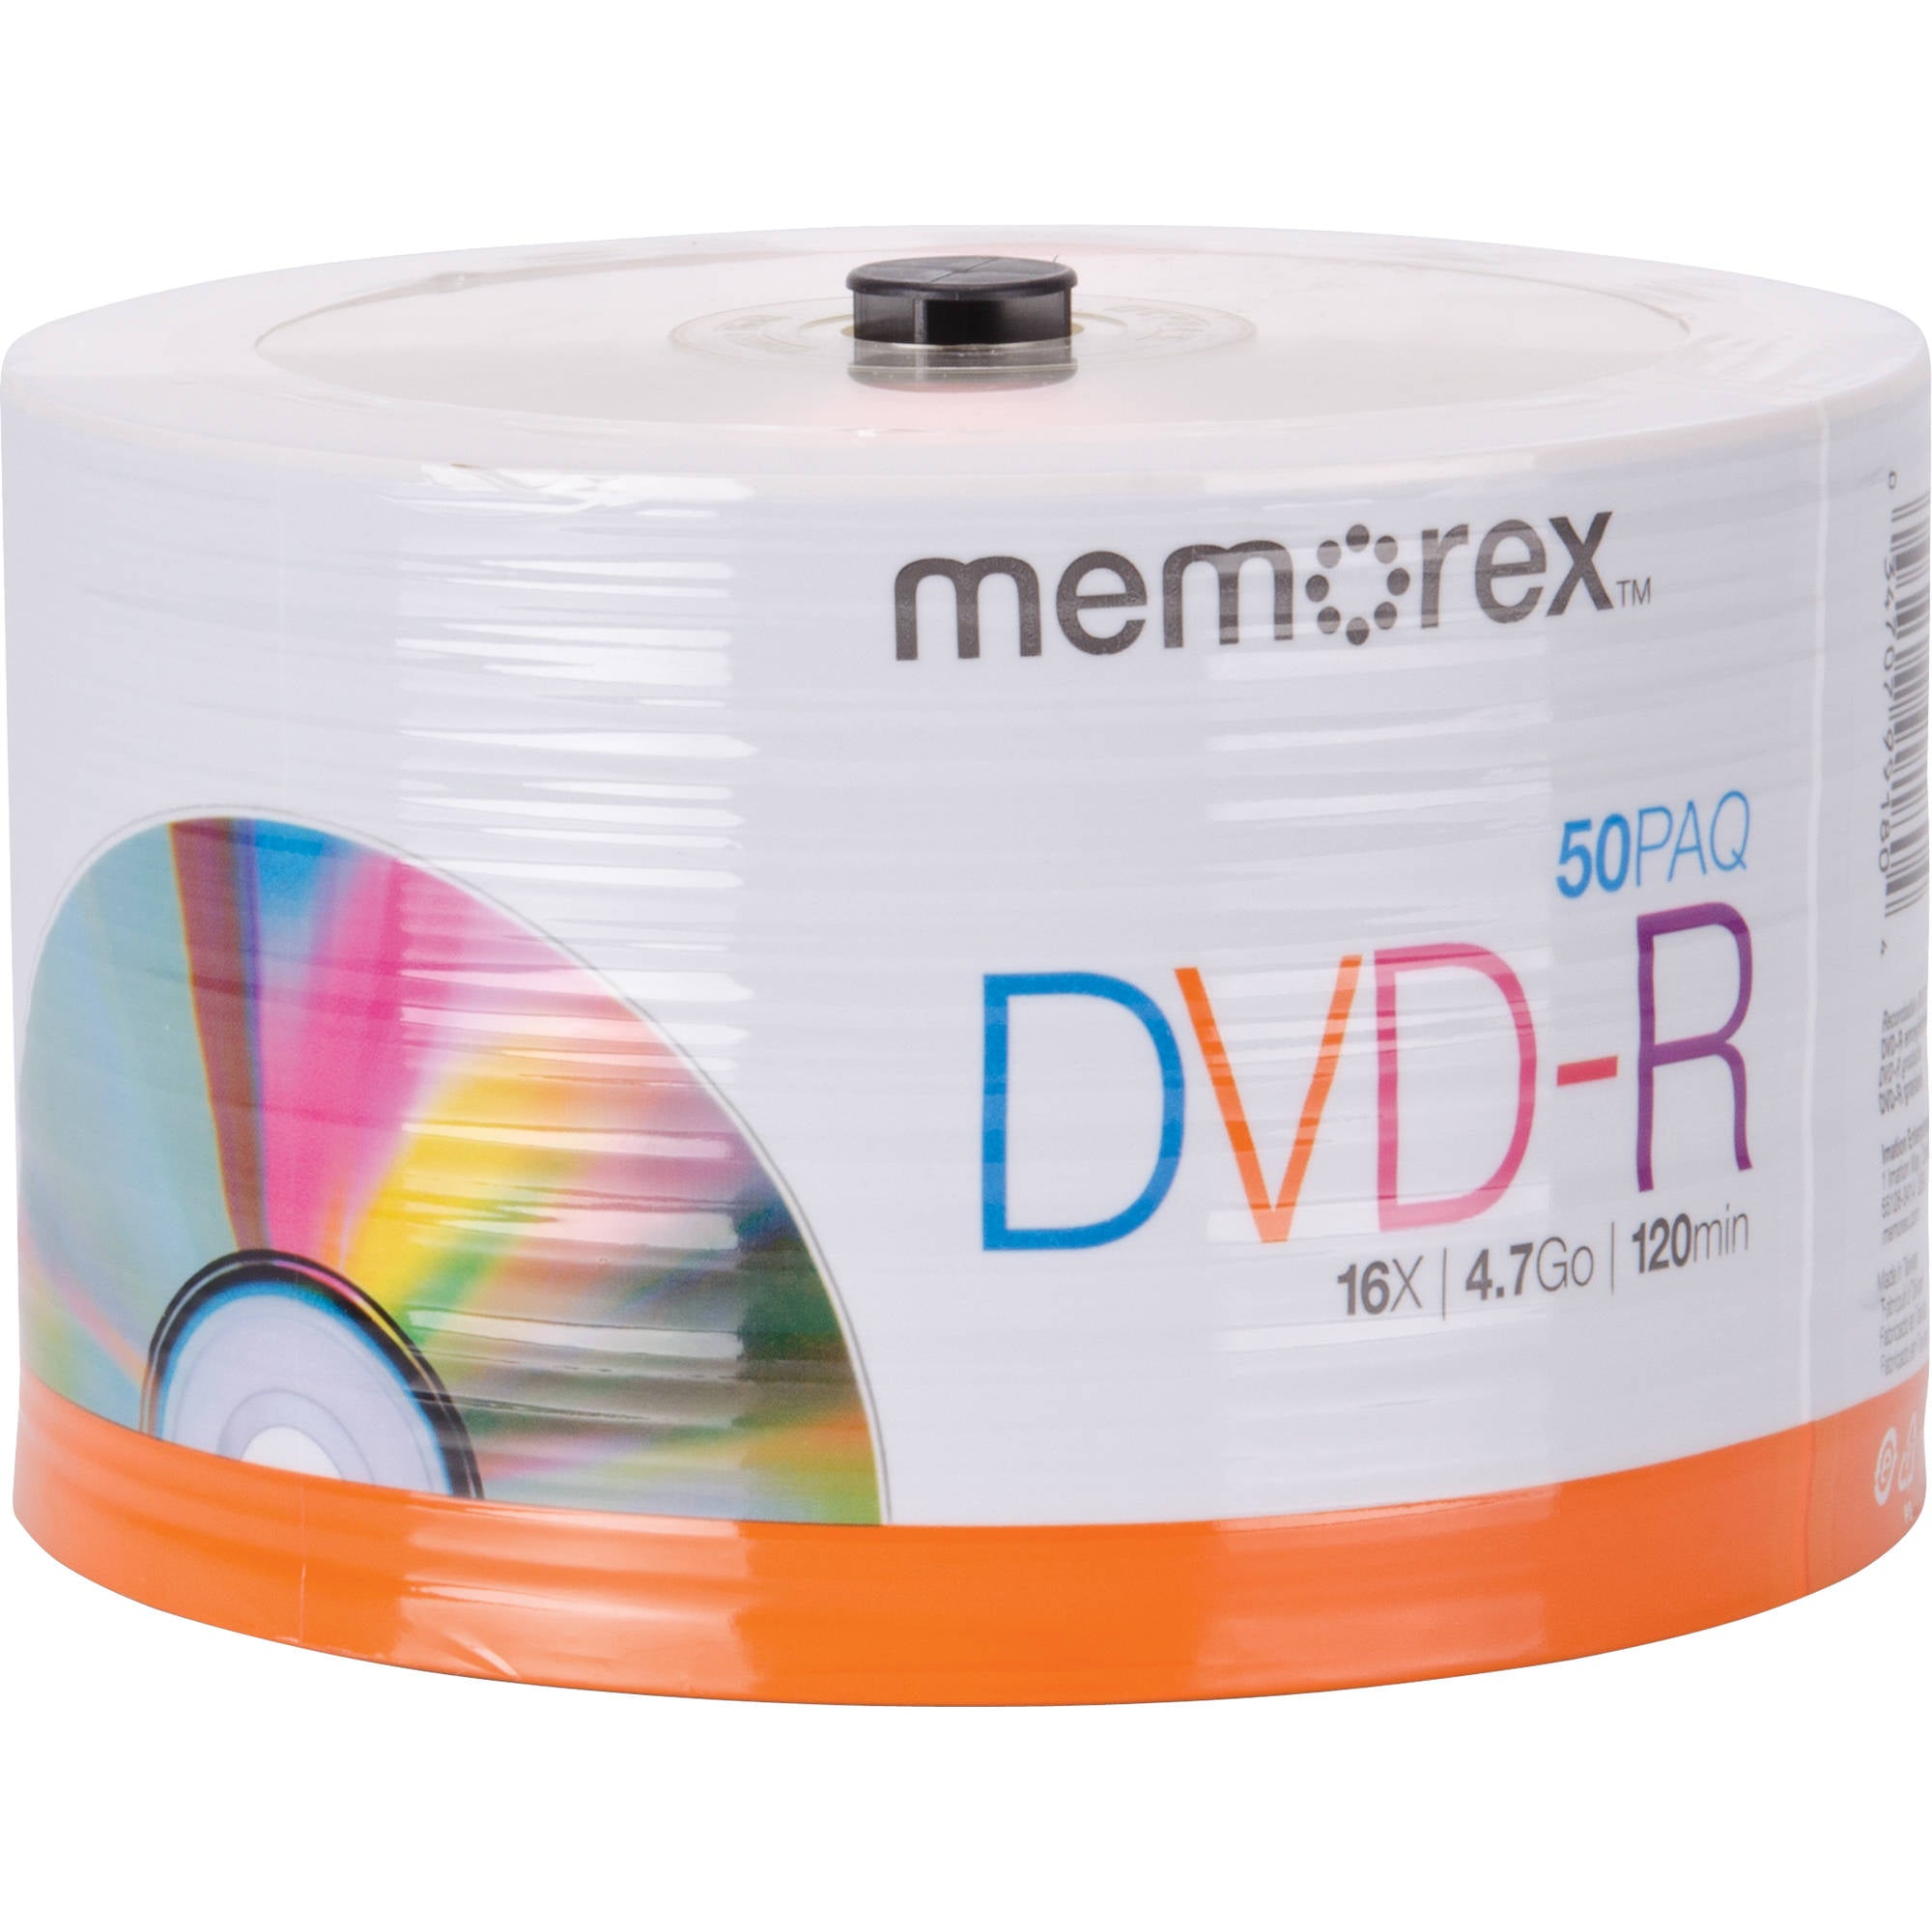 MEMOREX DVDR MEMOREX 32020015478